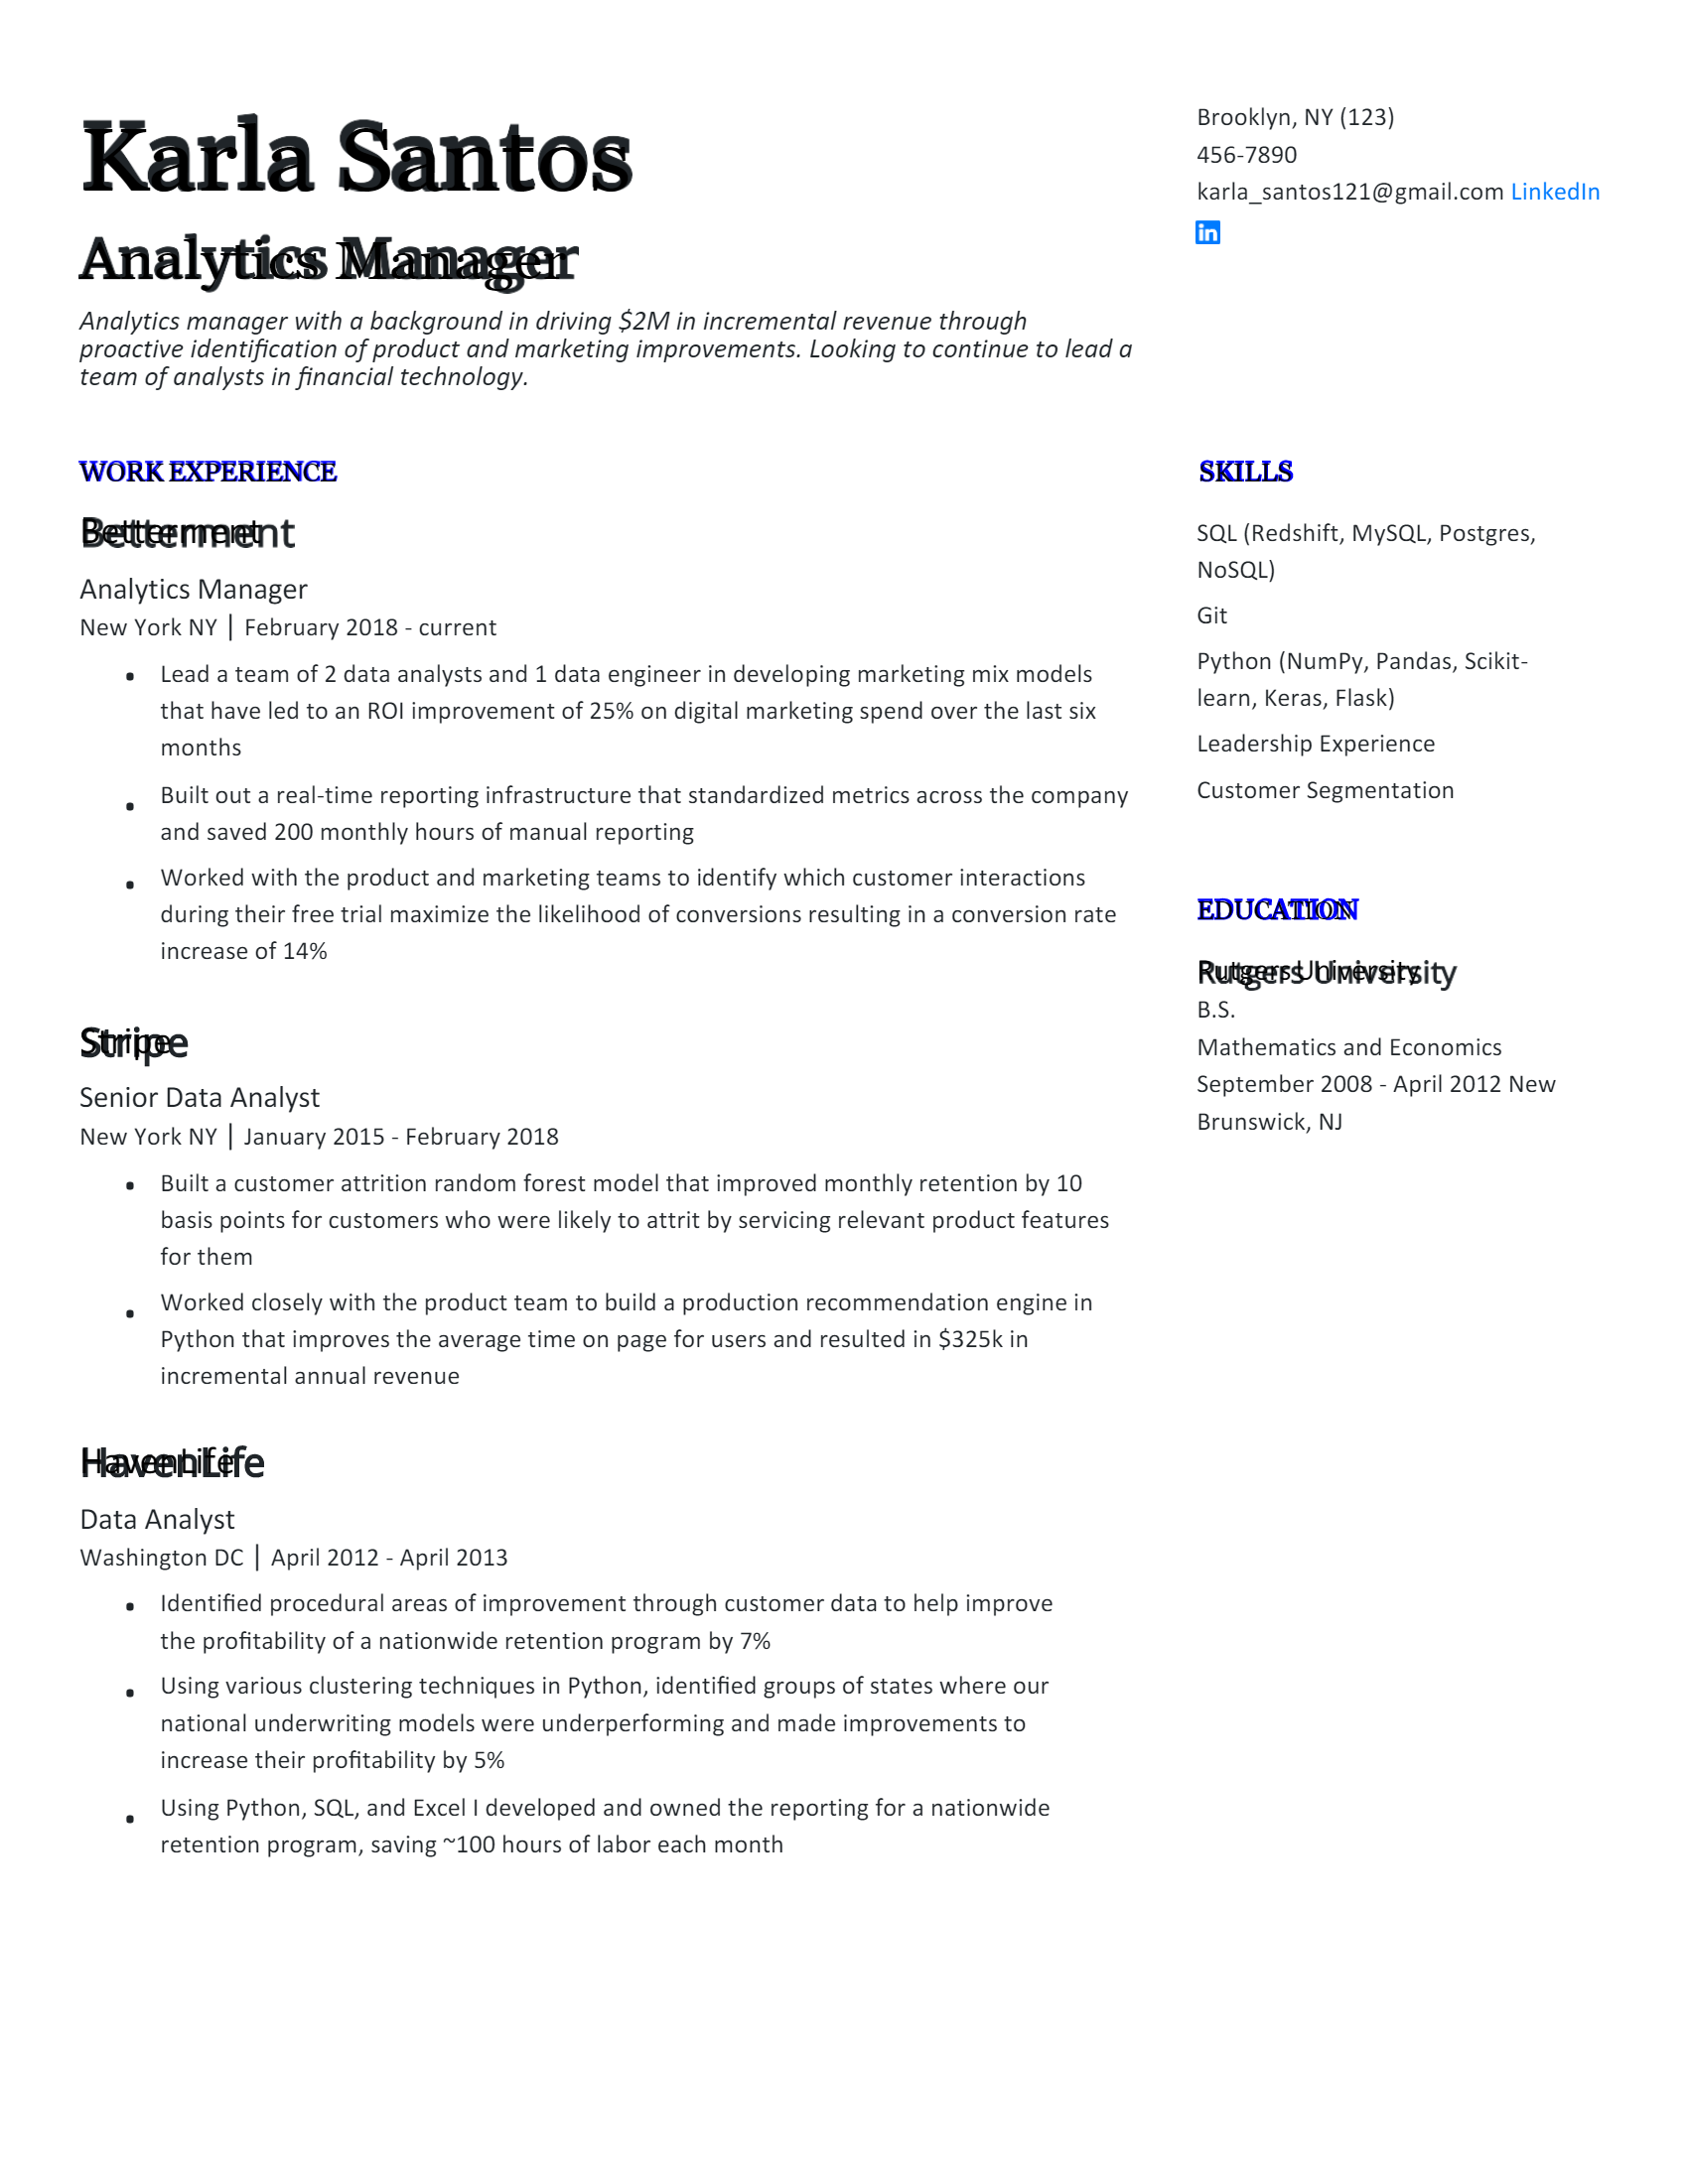 Analytics Manager Resume .Docx (Word)